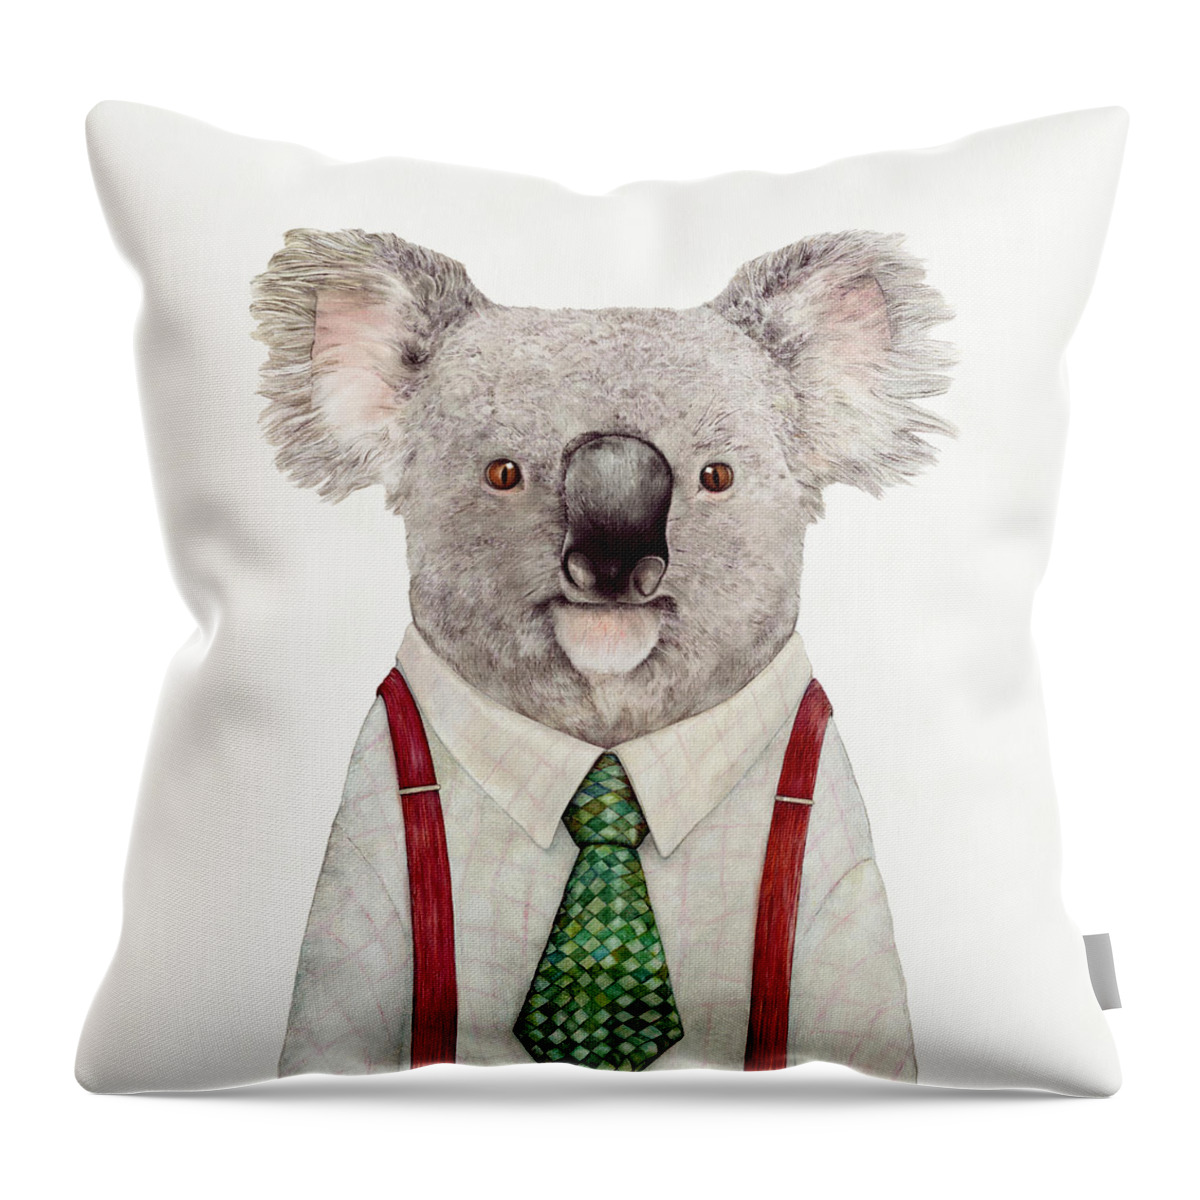 #faatoppicks Throw Pillow featuring the painting Koala by Animal Crew